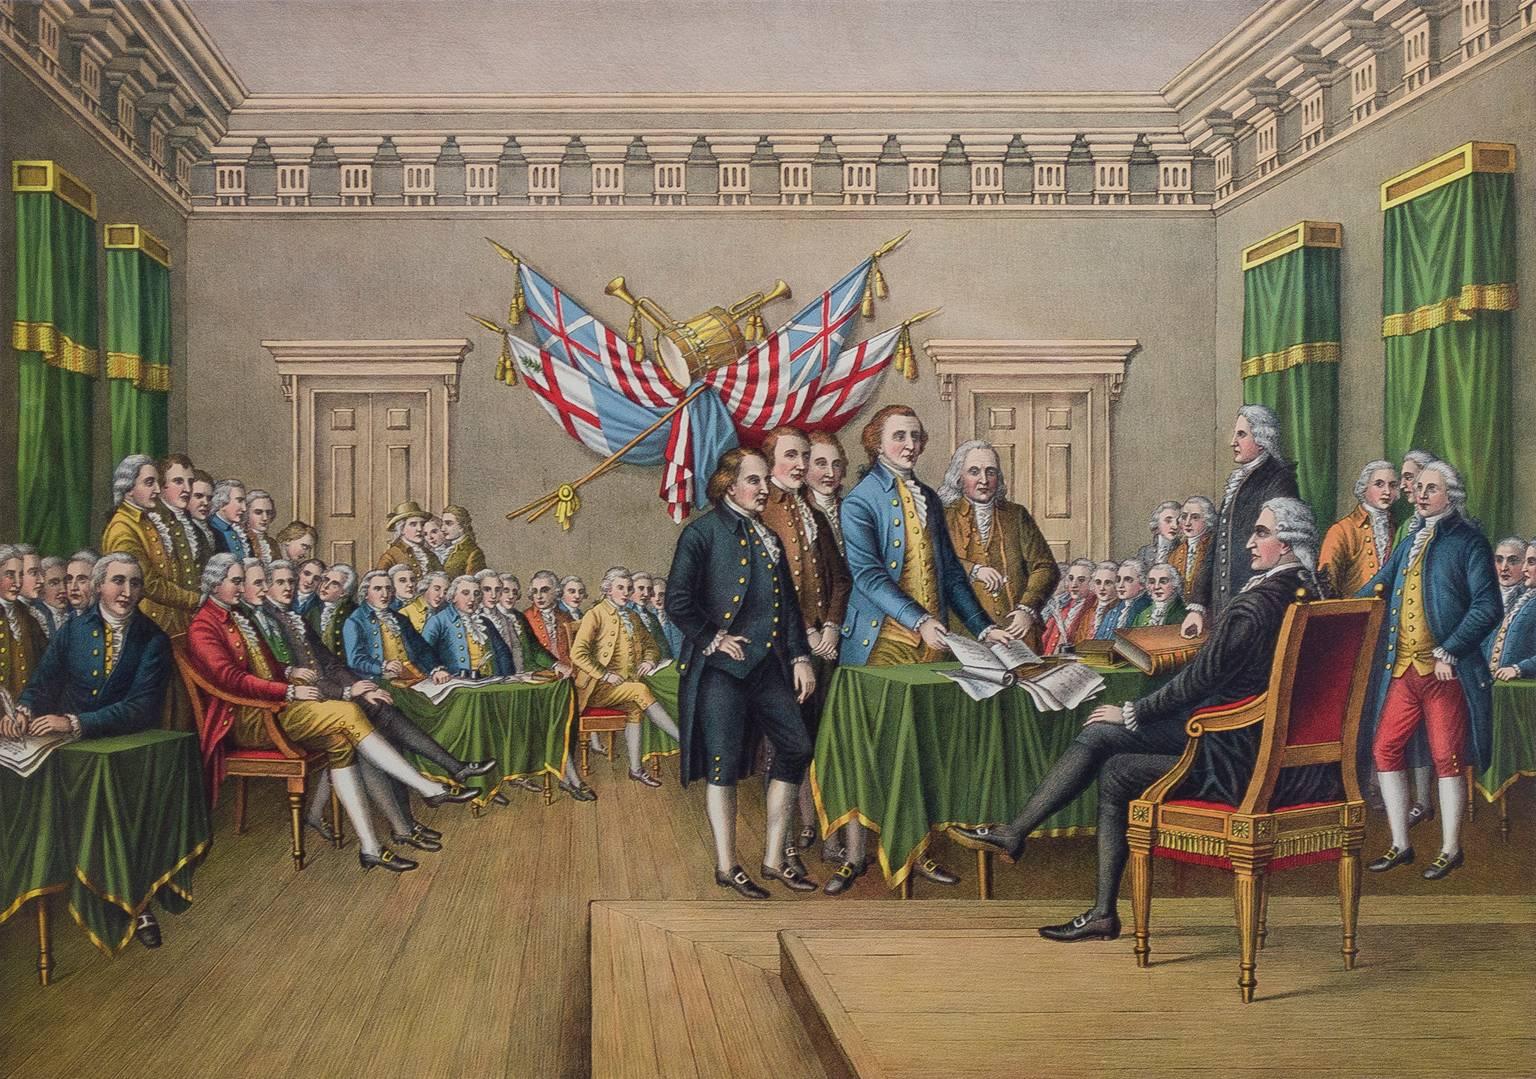 Kurz and Allison Figurative Print - "Declaration of Independence, " Original Lithograph by Kurz & Allison 